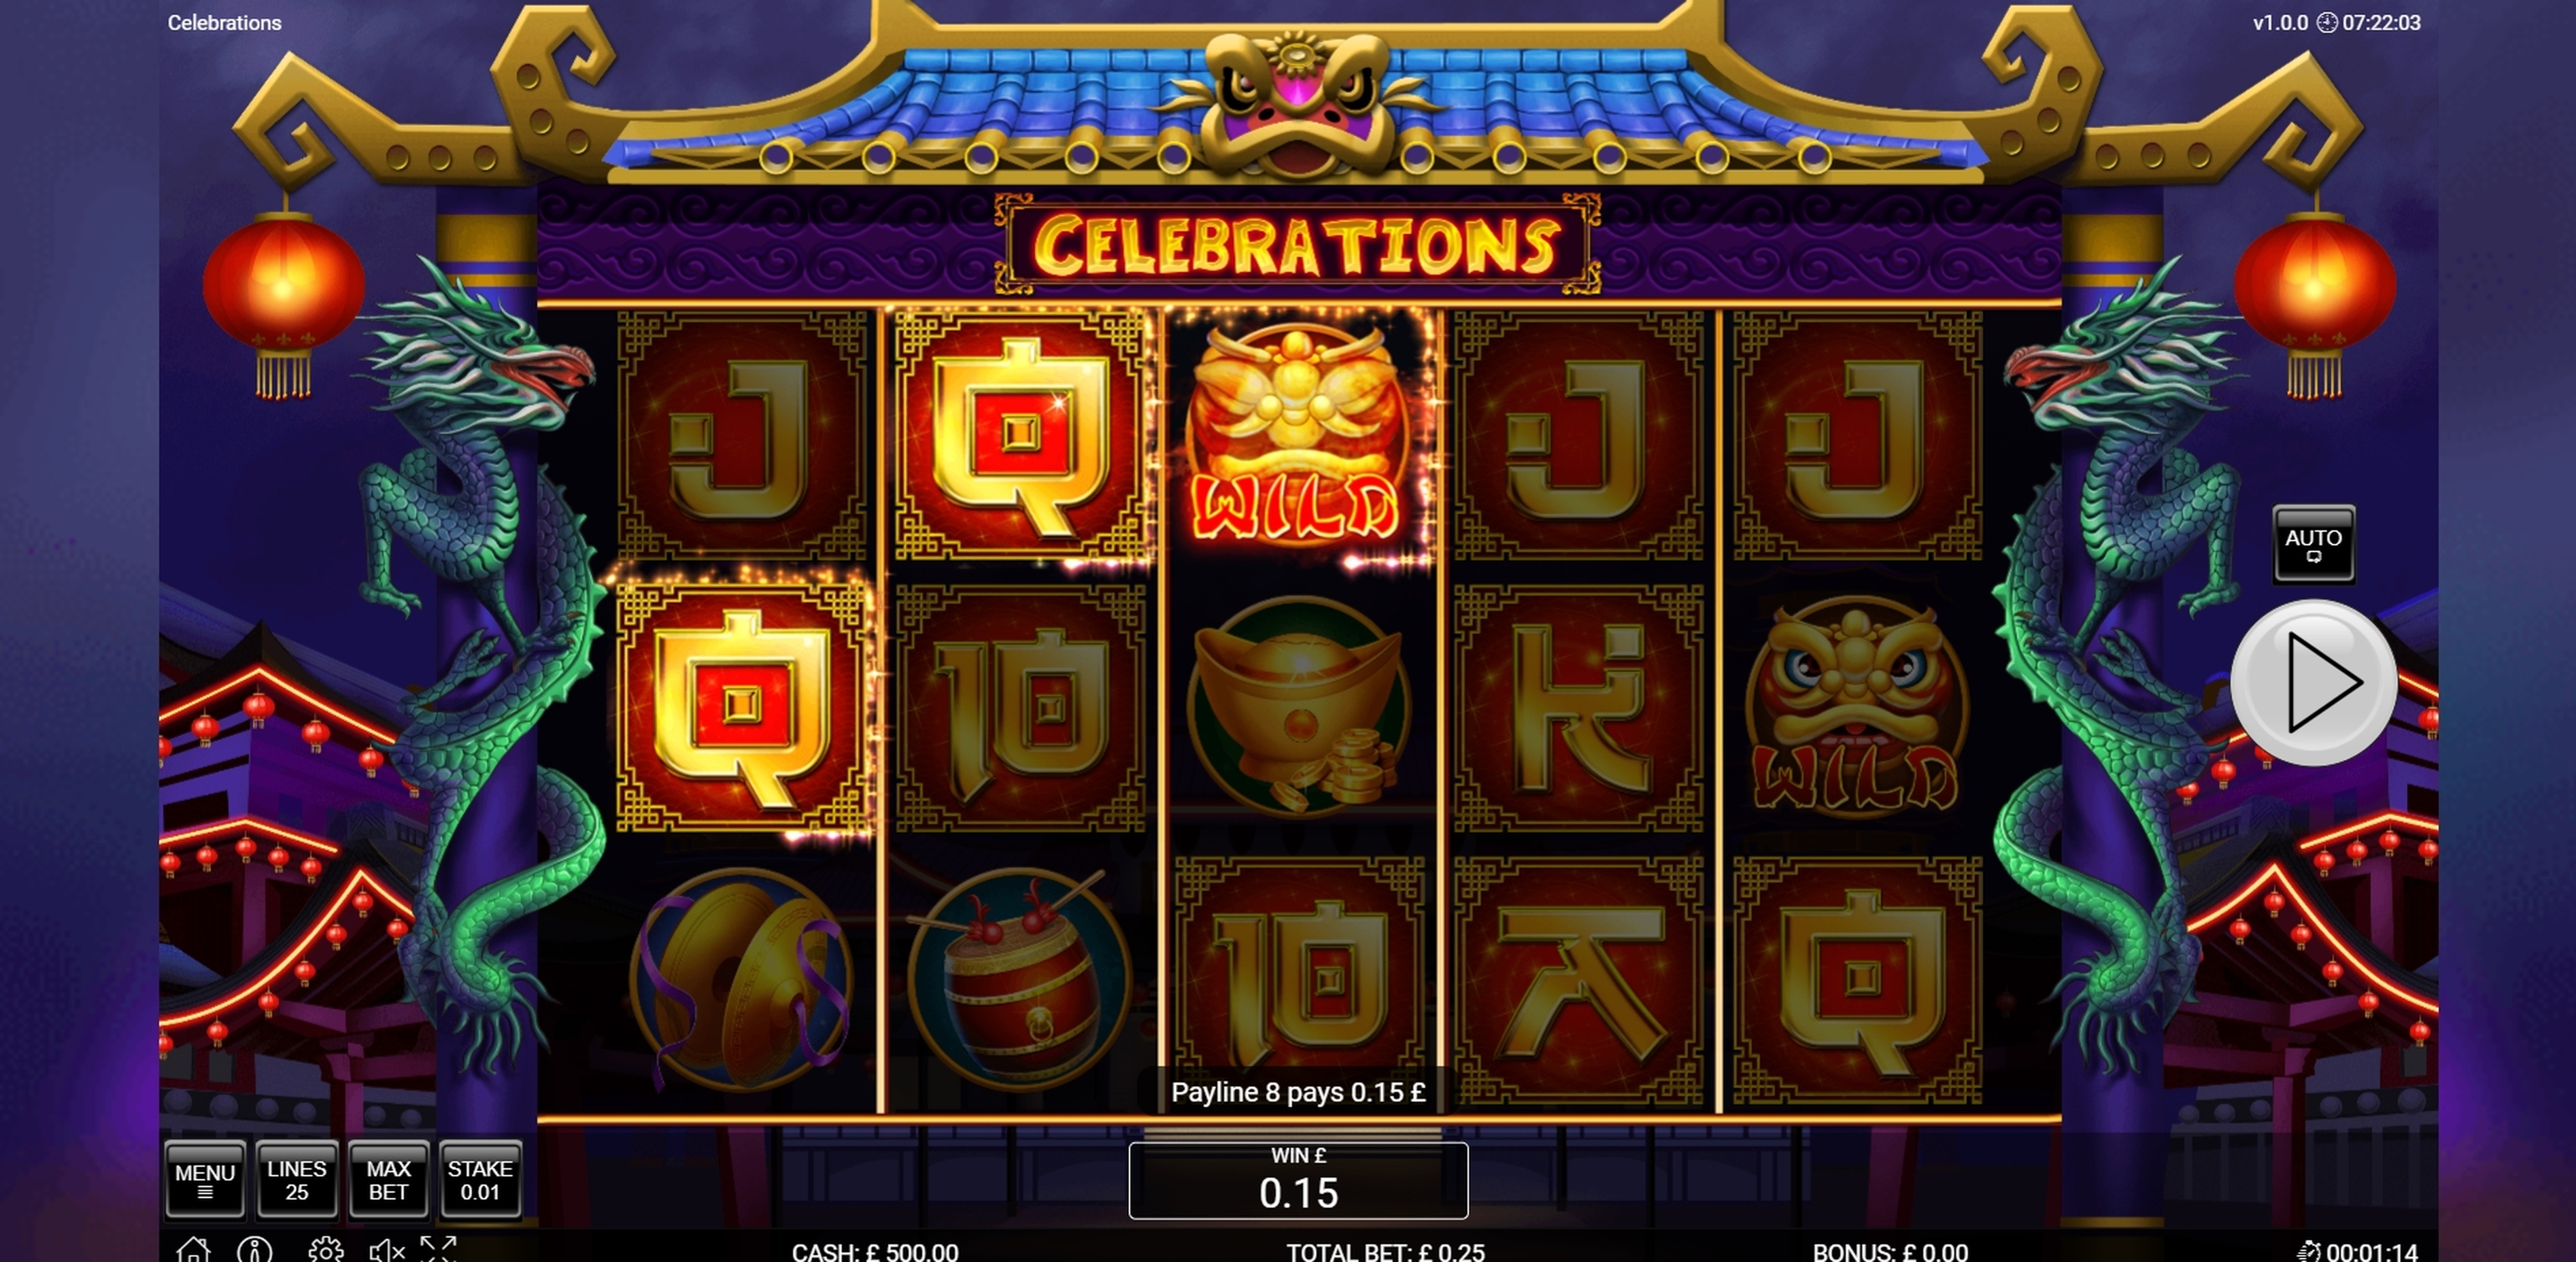 Win Money in Celebrations Free Slot Game by Nektan